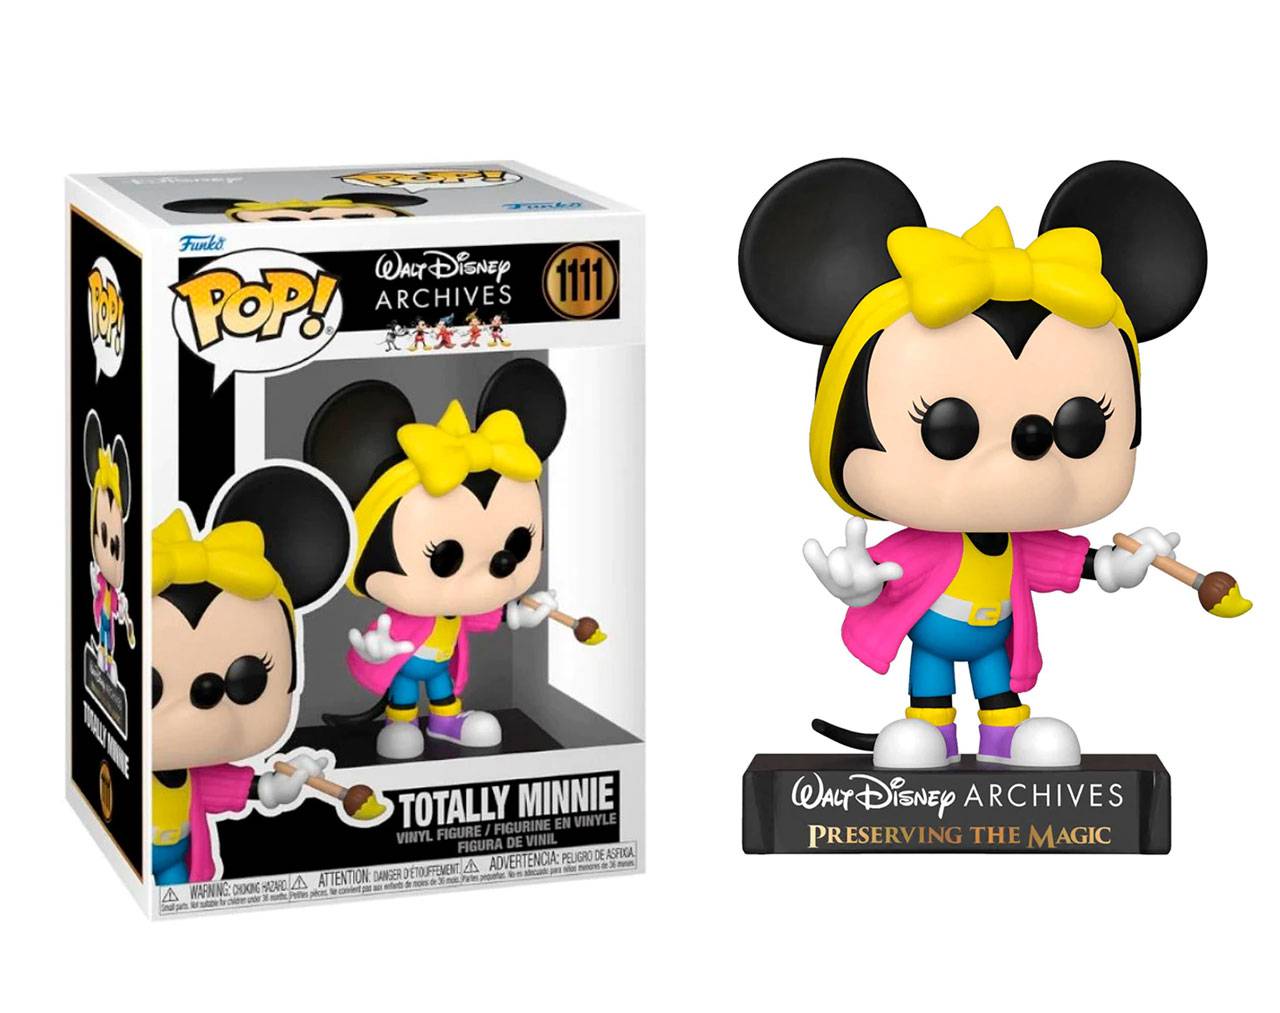 Totally Minnie - 50th Walt Disney Archives Pop! Vinyl